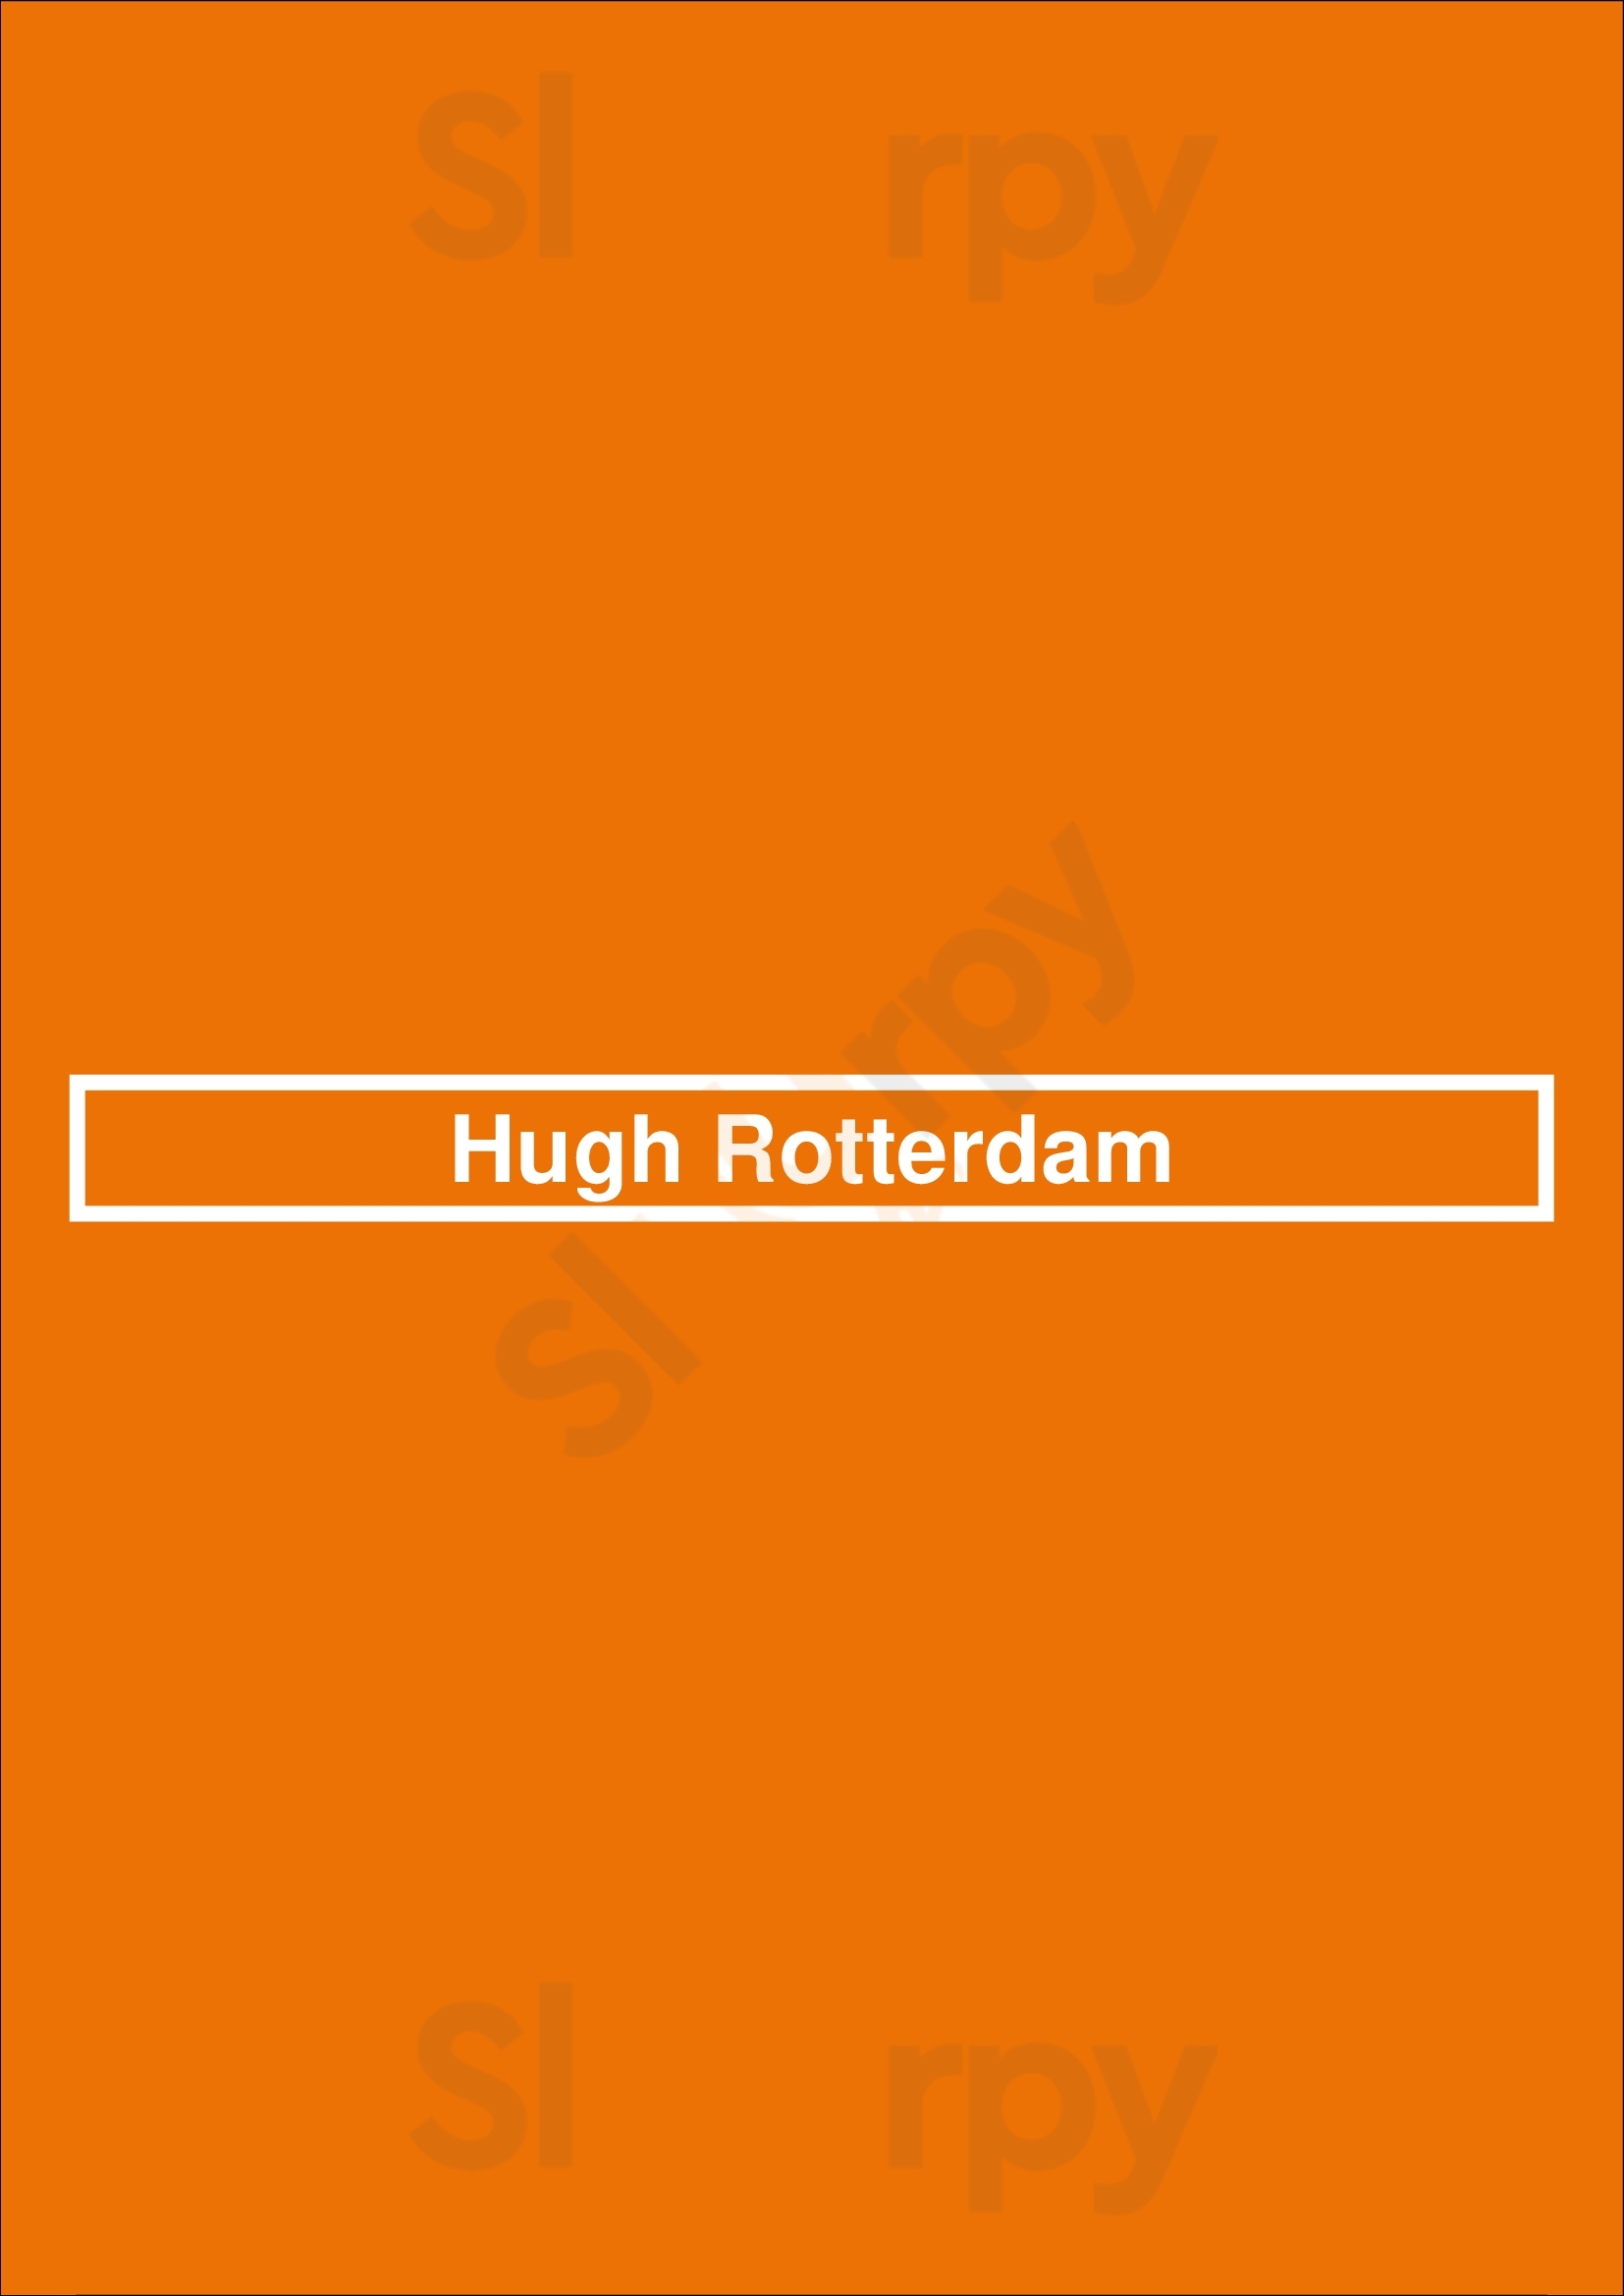 Hugh Rotterdam Rotterdam Menu - 1